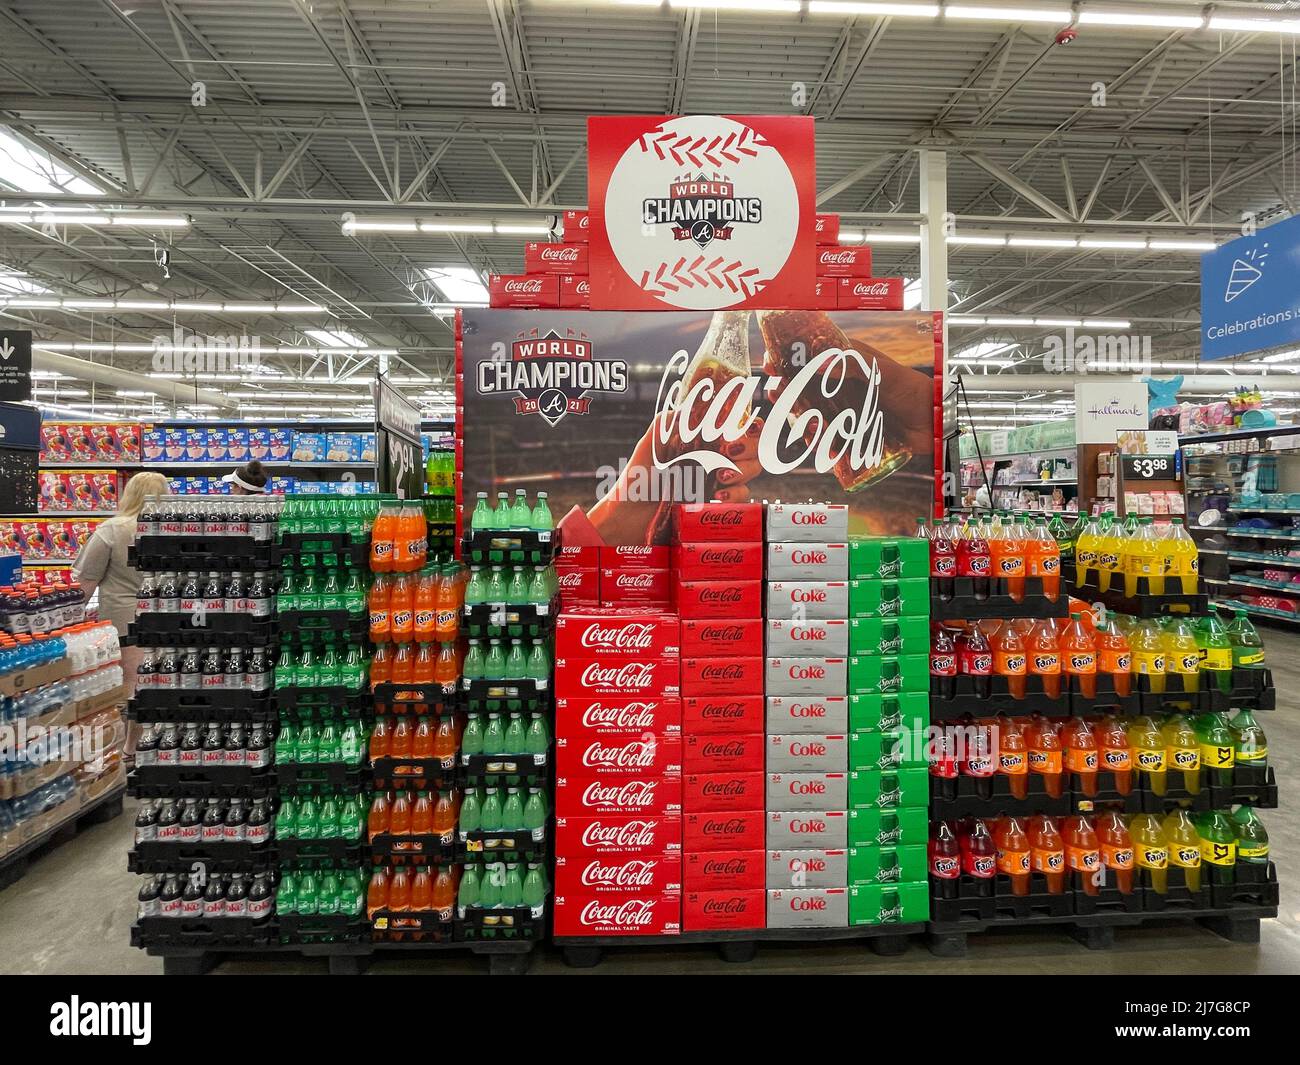 Grovetown, Ga USA - 04 20 22: Coca Cola themed champion display front view Stock Photo